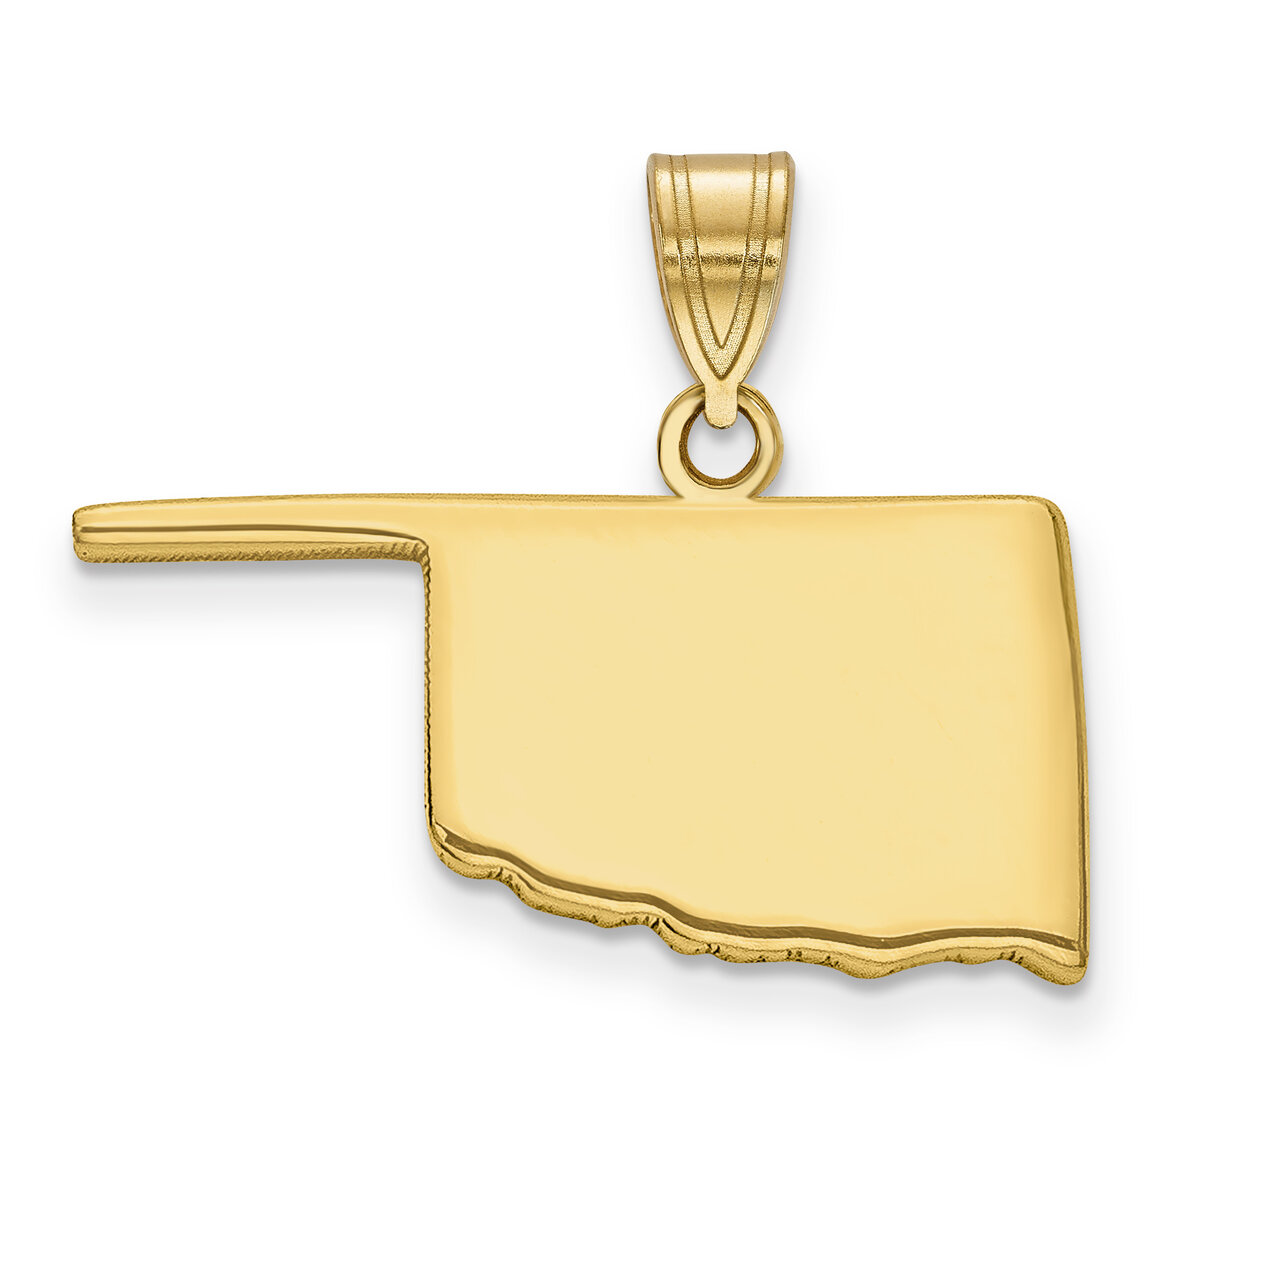 Oklahoma State Pendant Charm Gold-plated on Silver Engravable XNA707GP-OK